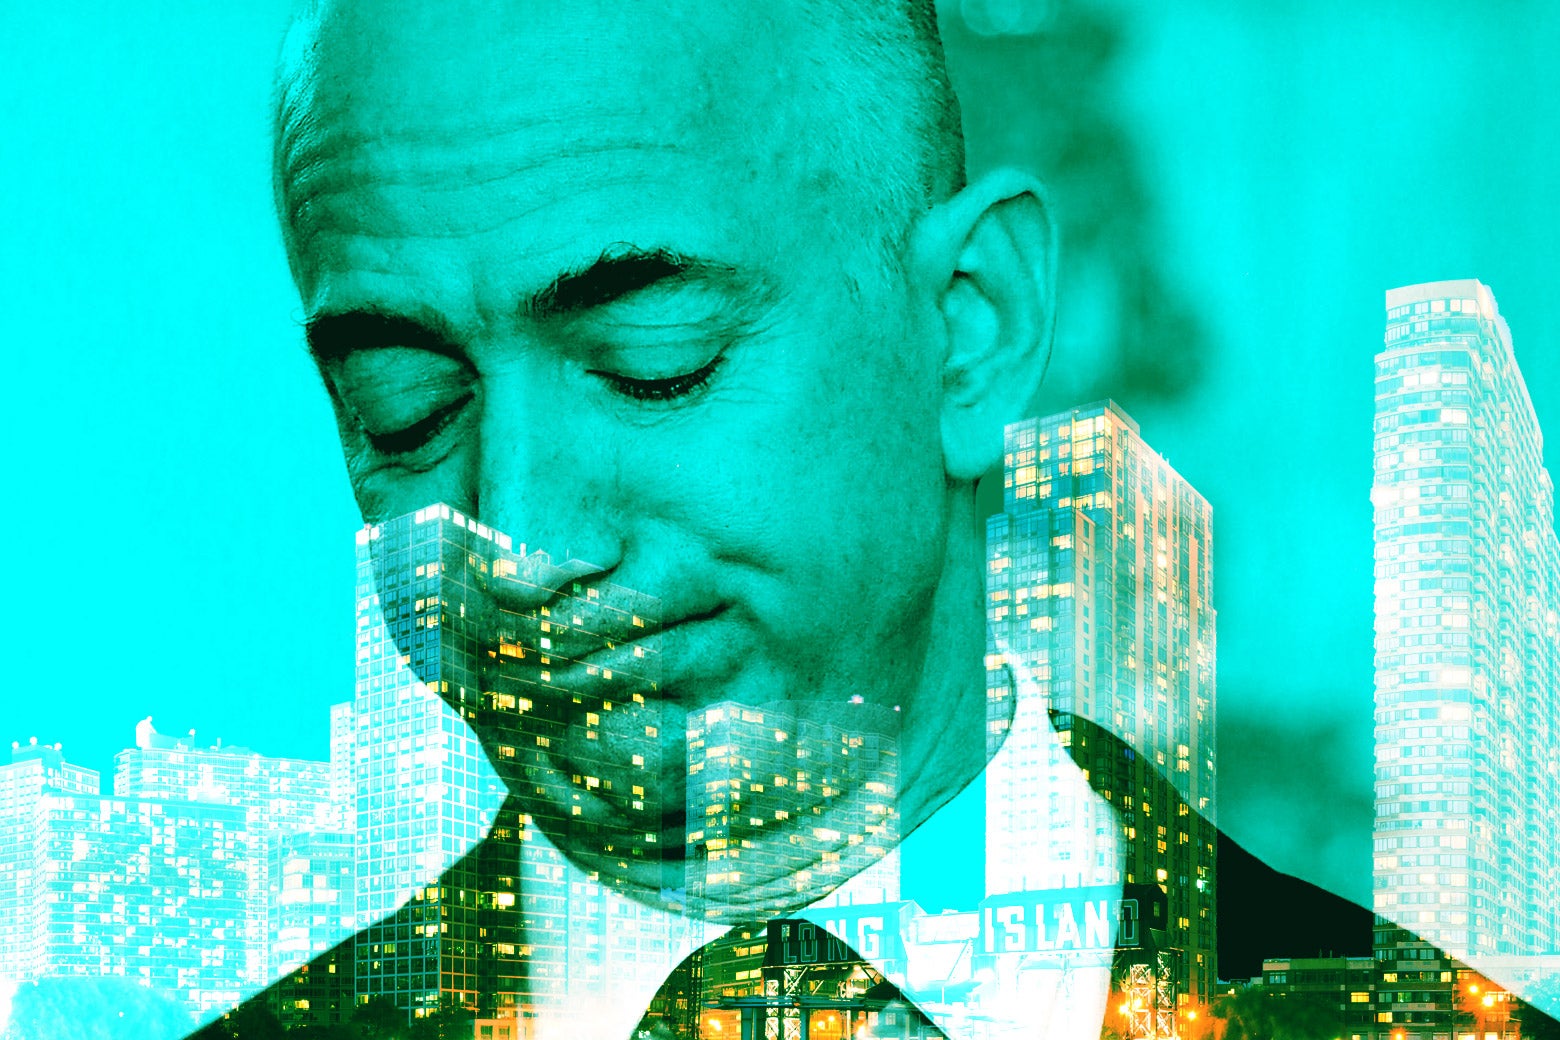 Jeff Bezos over the city skyline